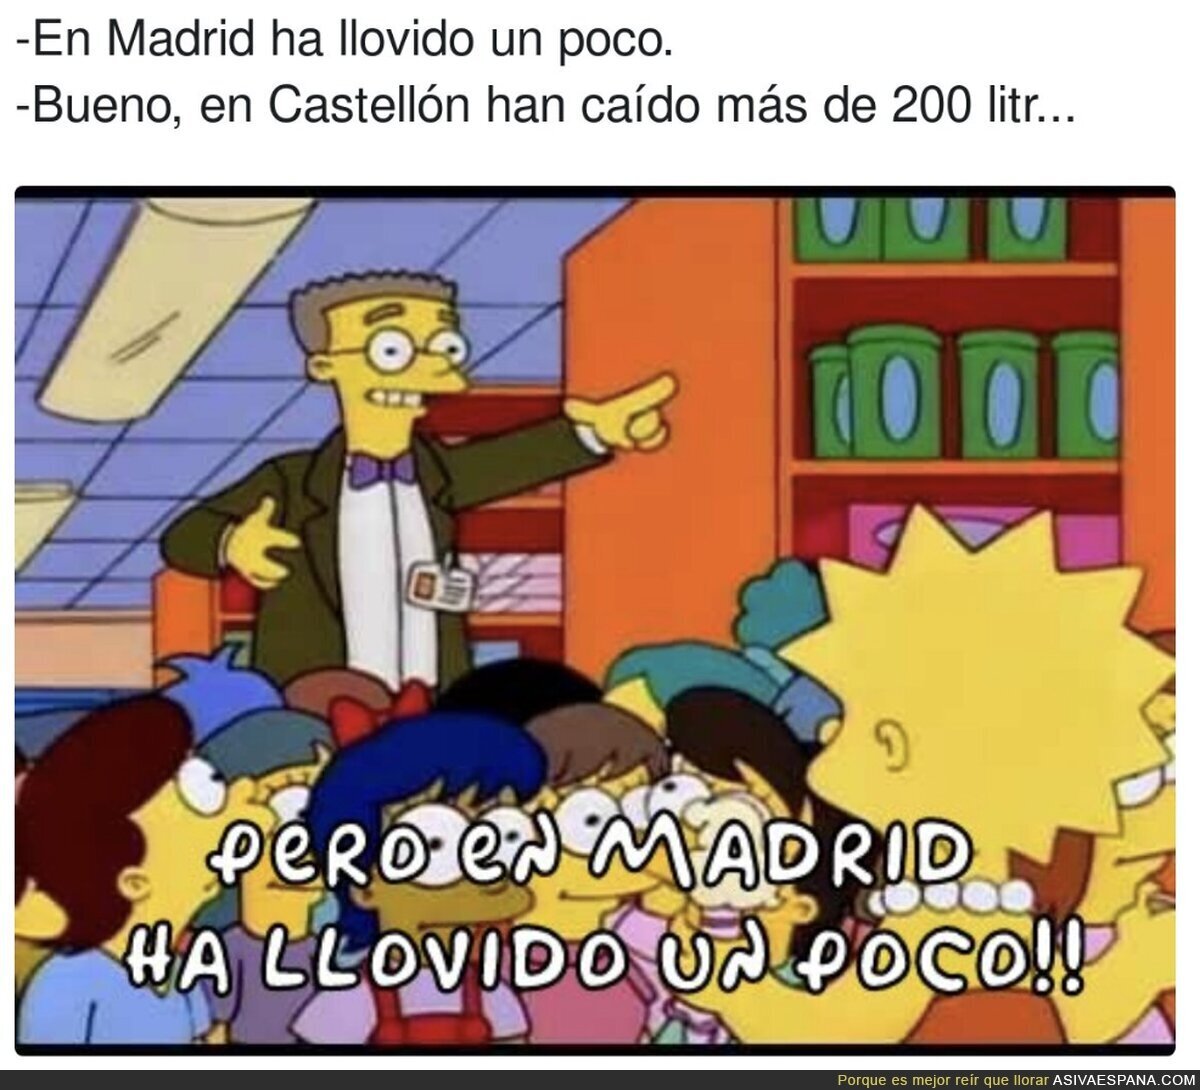 Drama en Madrid